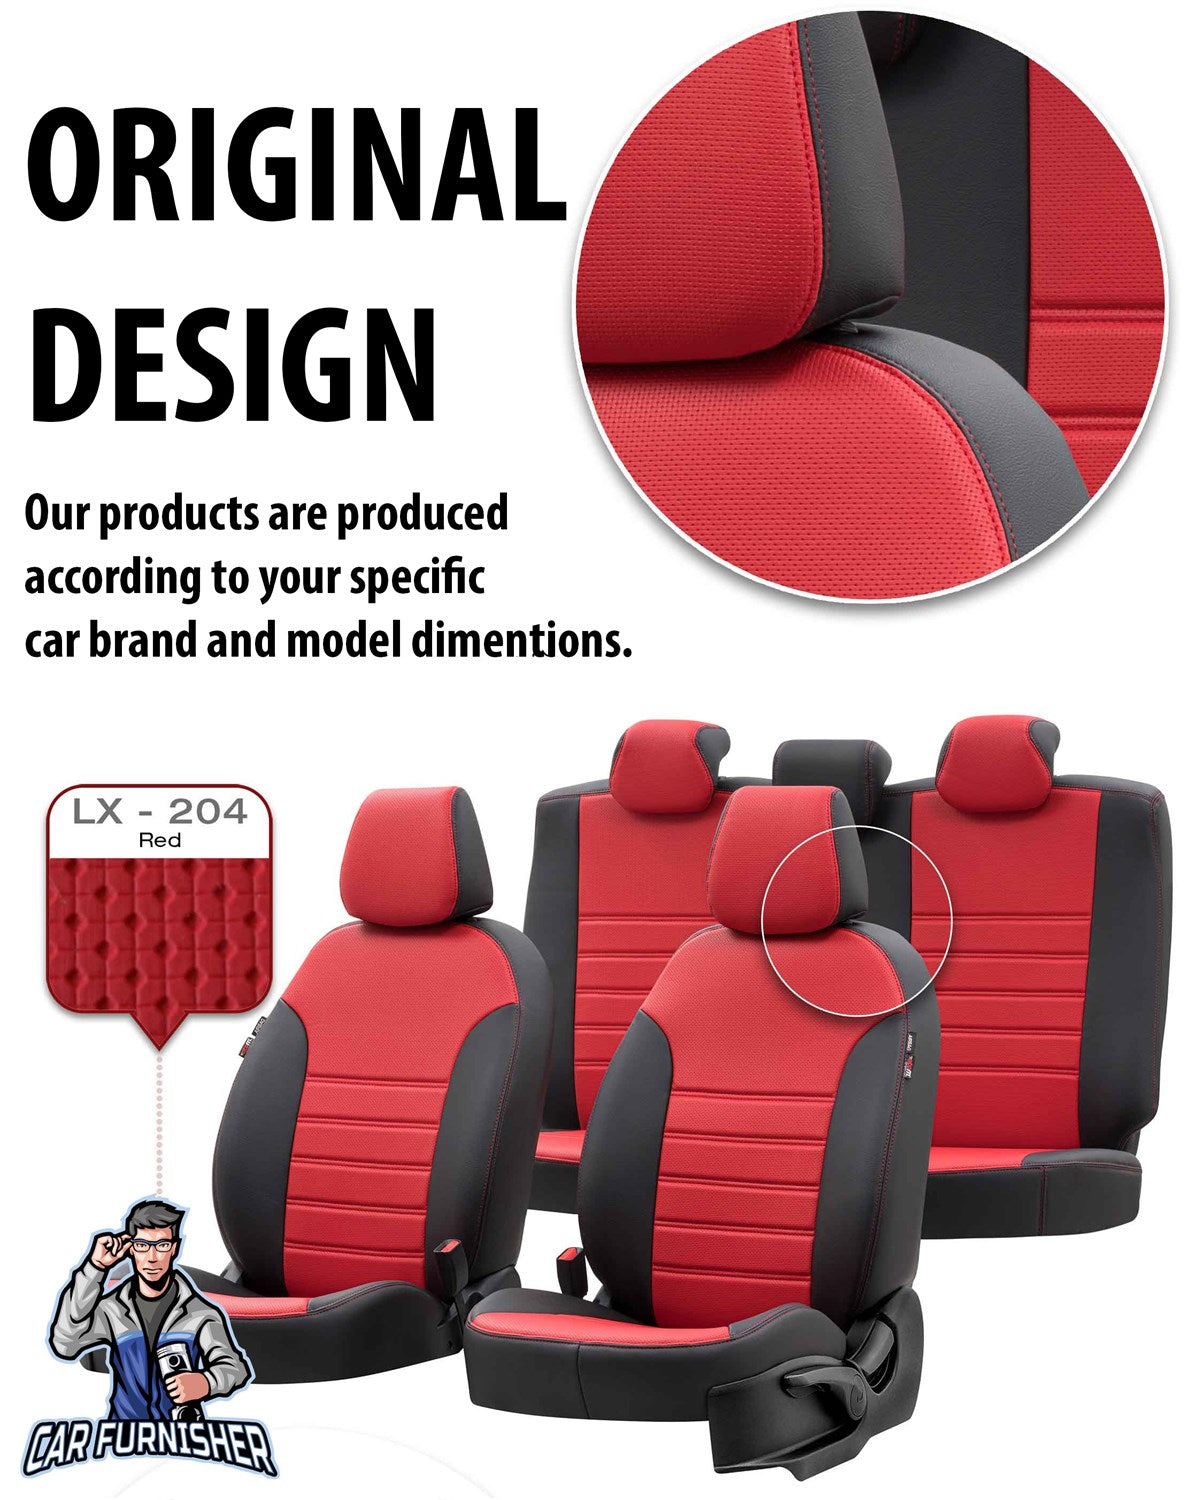 Toyota Rav4 Seat Cover New York Leather Design Smoked Black Leather